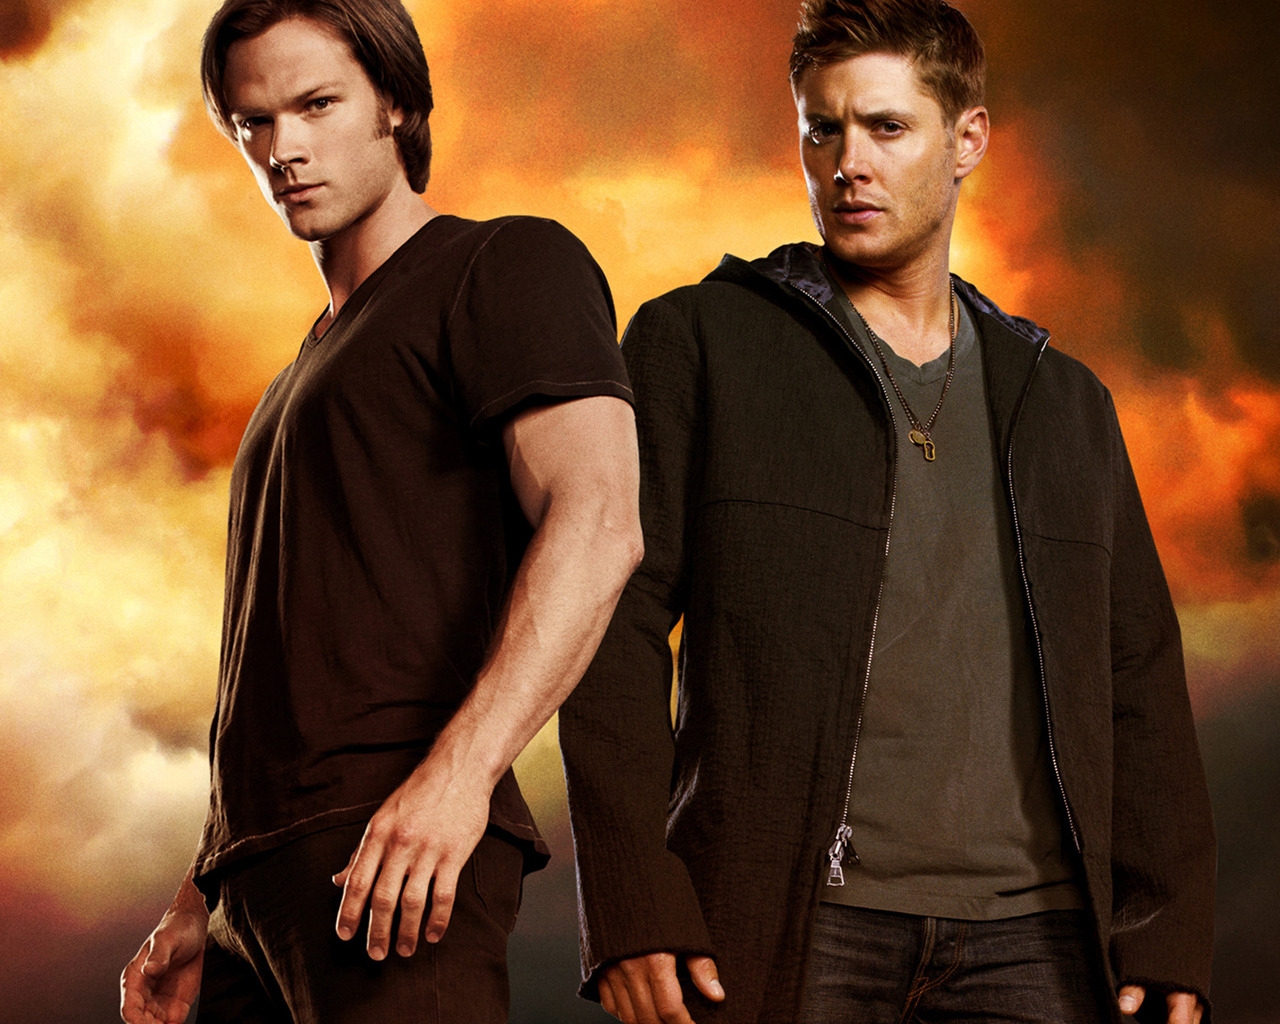 Supernatural Dean & Sam for 1280 x 1024 resolution